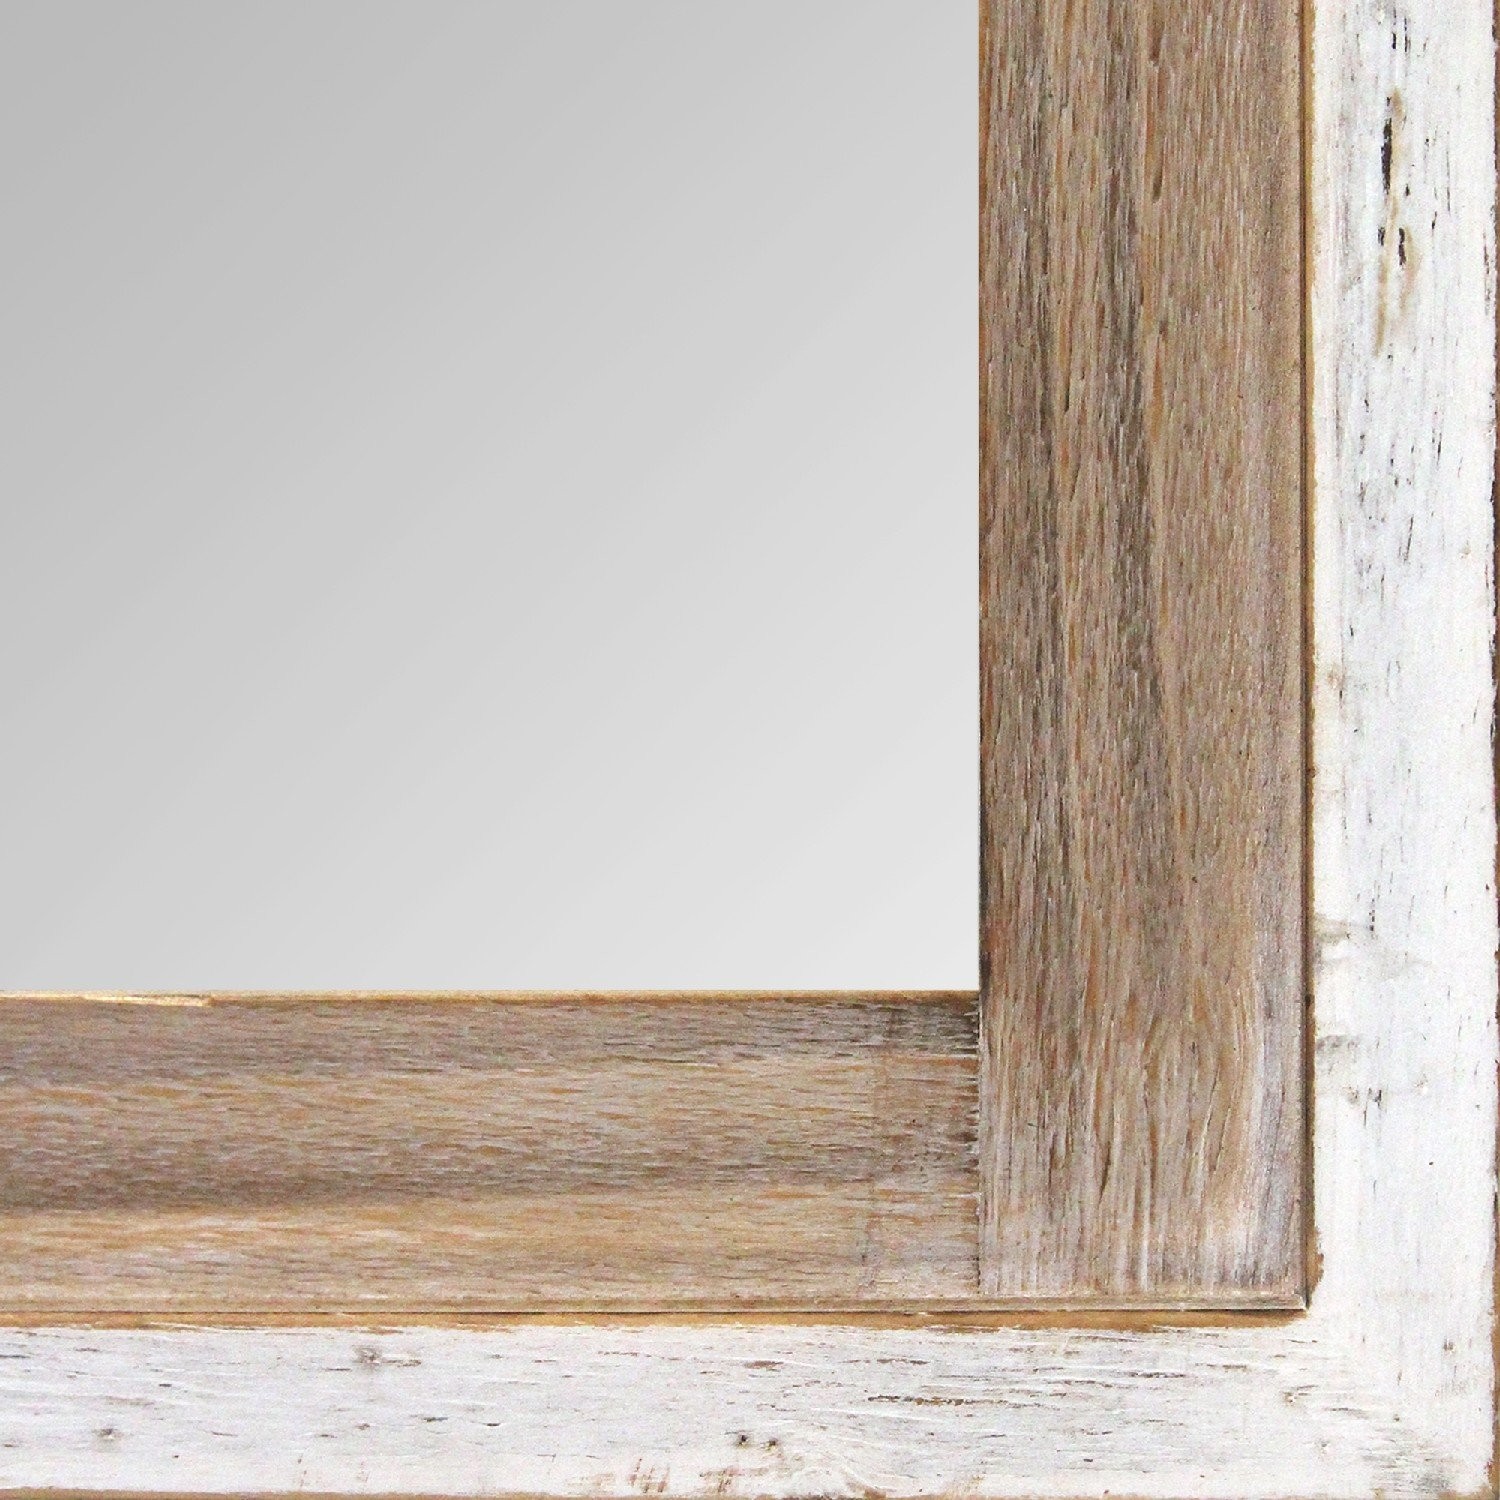 Distressed White Adeline Wood Framed Mirror